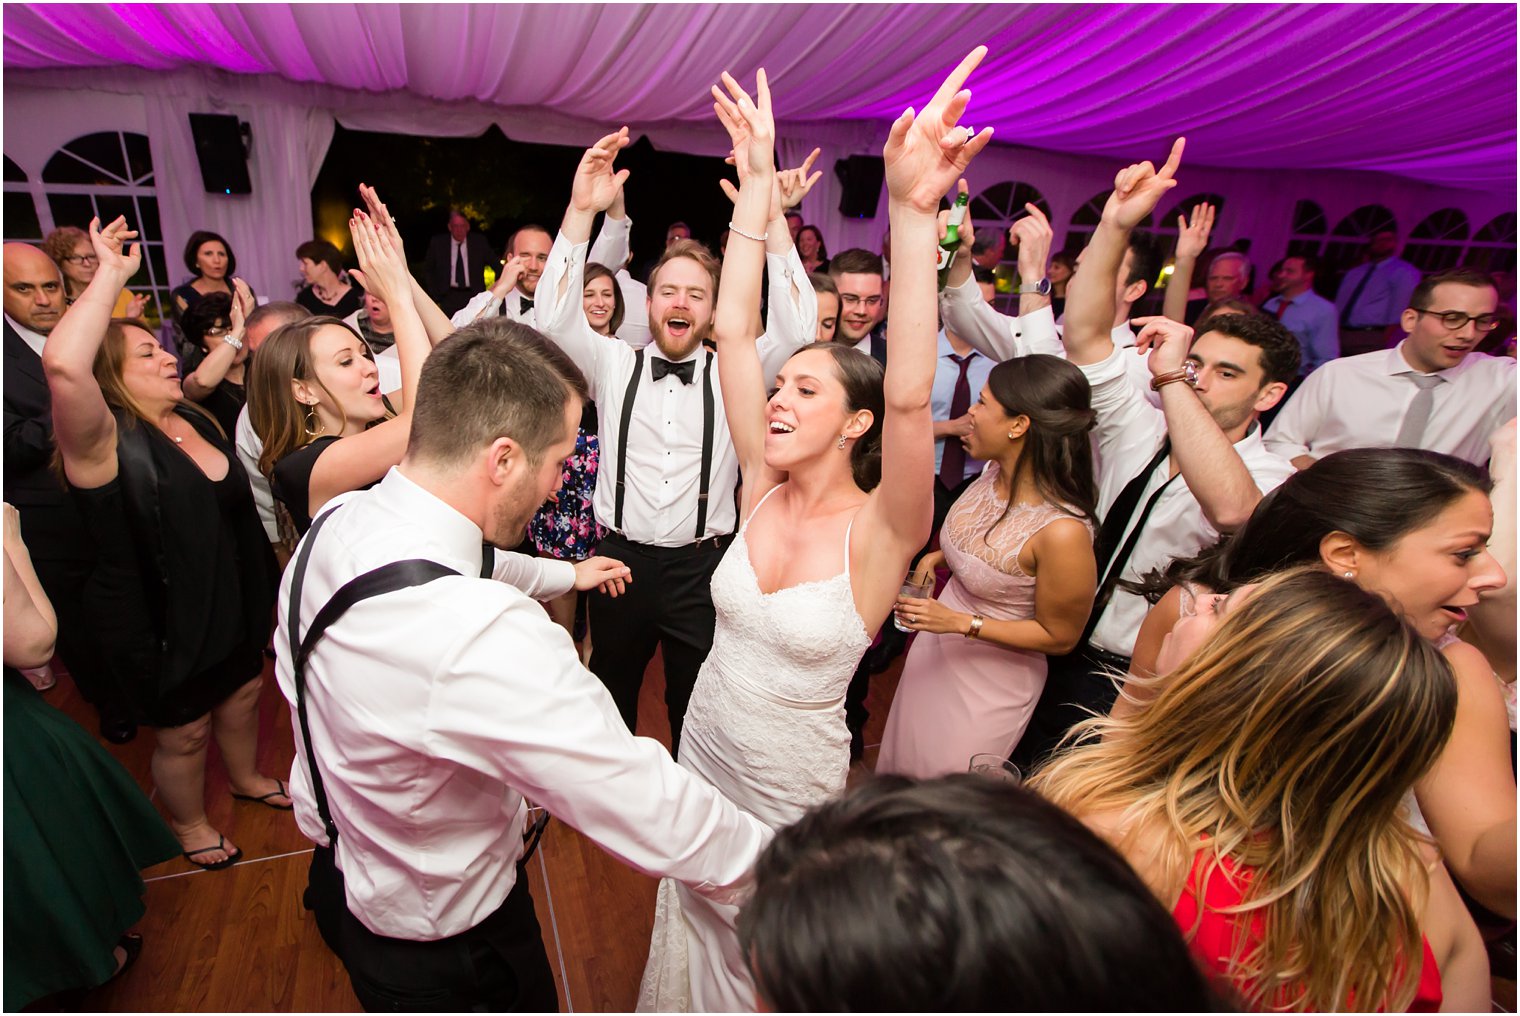 Reception dancing at tented reception wedding | Photo by Idalia Photography